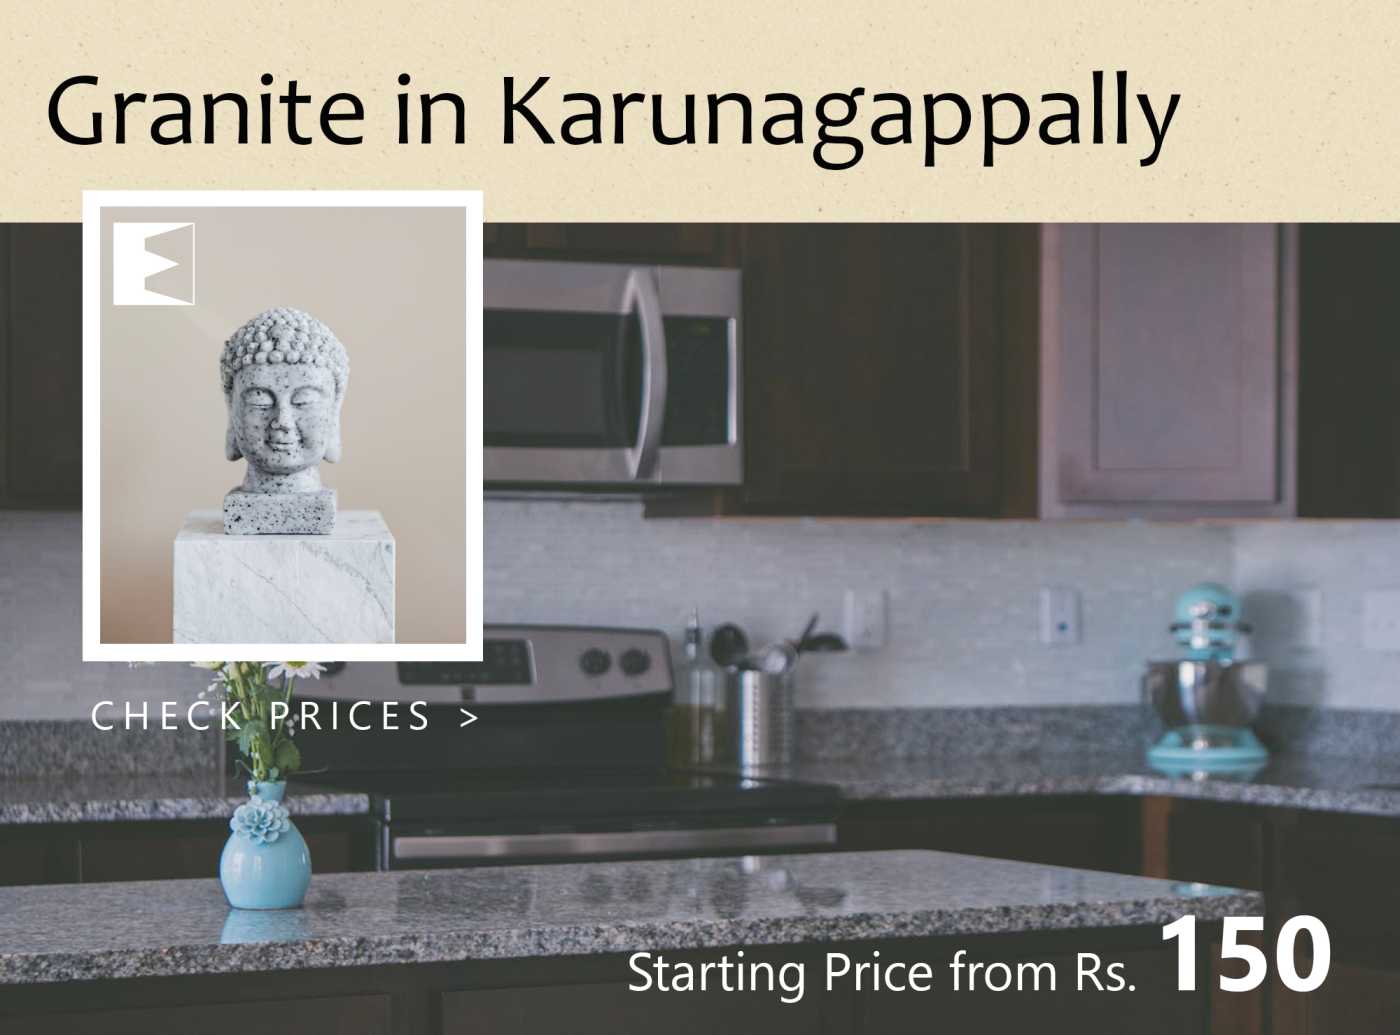 Searching for Granite Shops in Karunagappally?